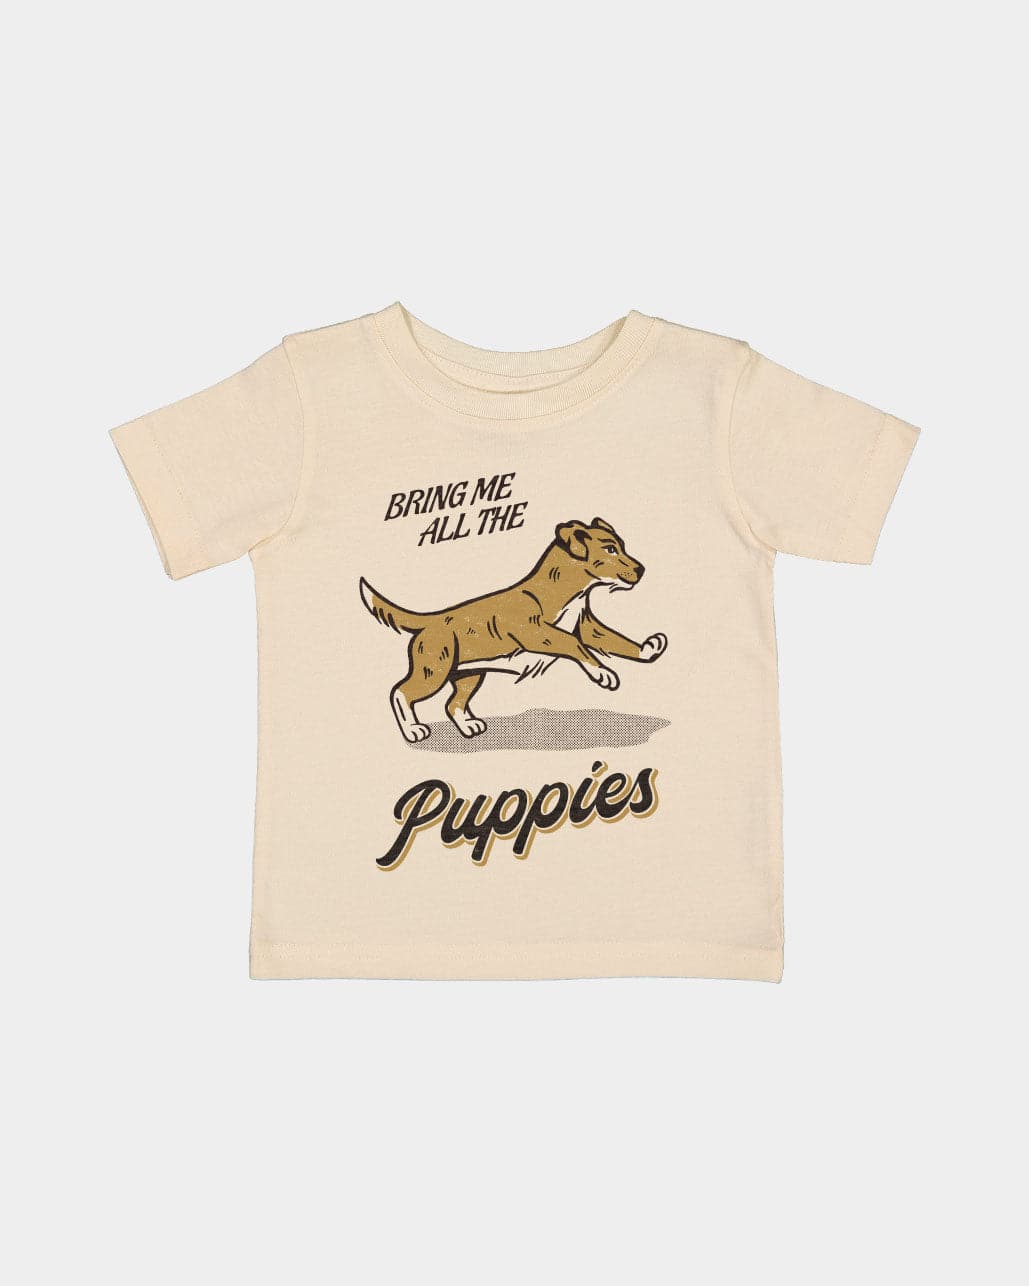 Shop Good | Bring Me Puppies Kids Tee